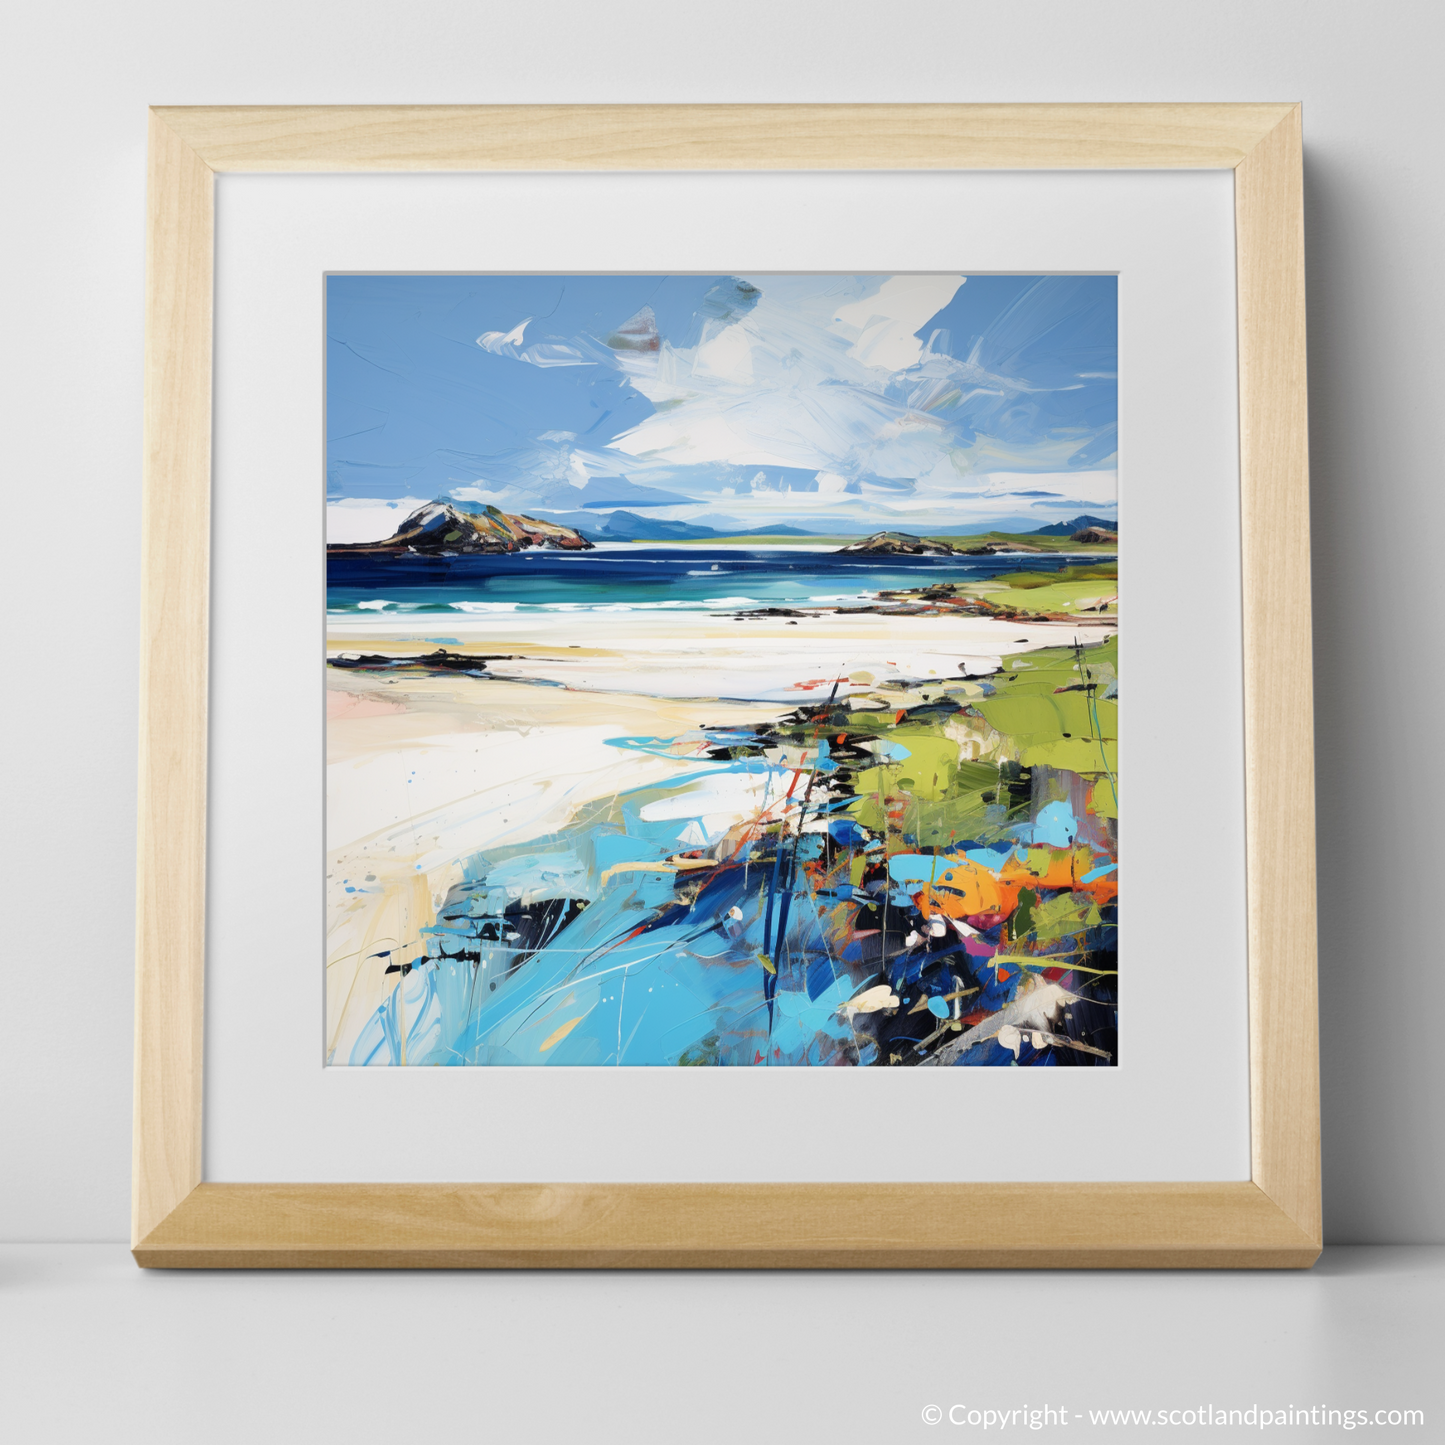 Art Print of Camusdarach Beach with a natural frame